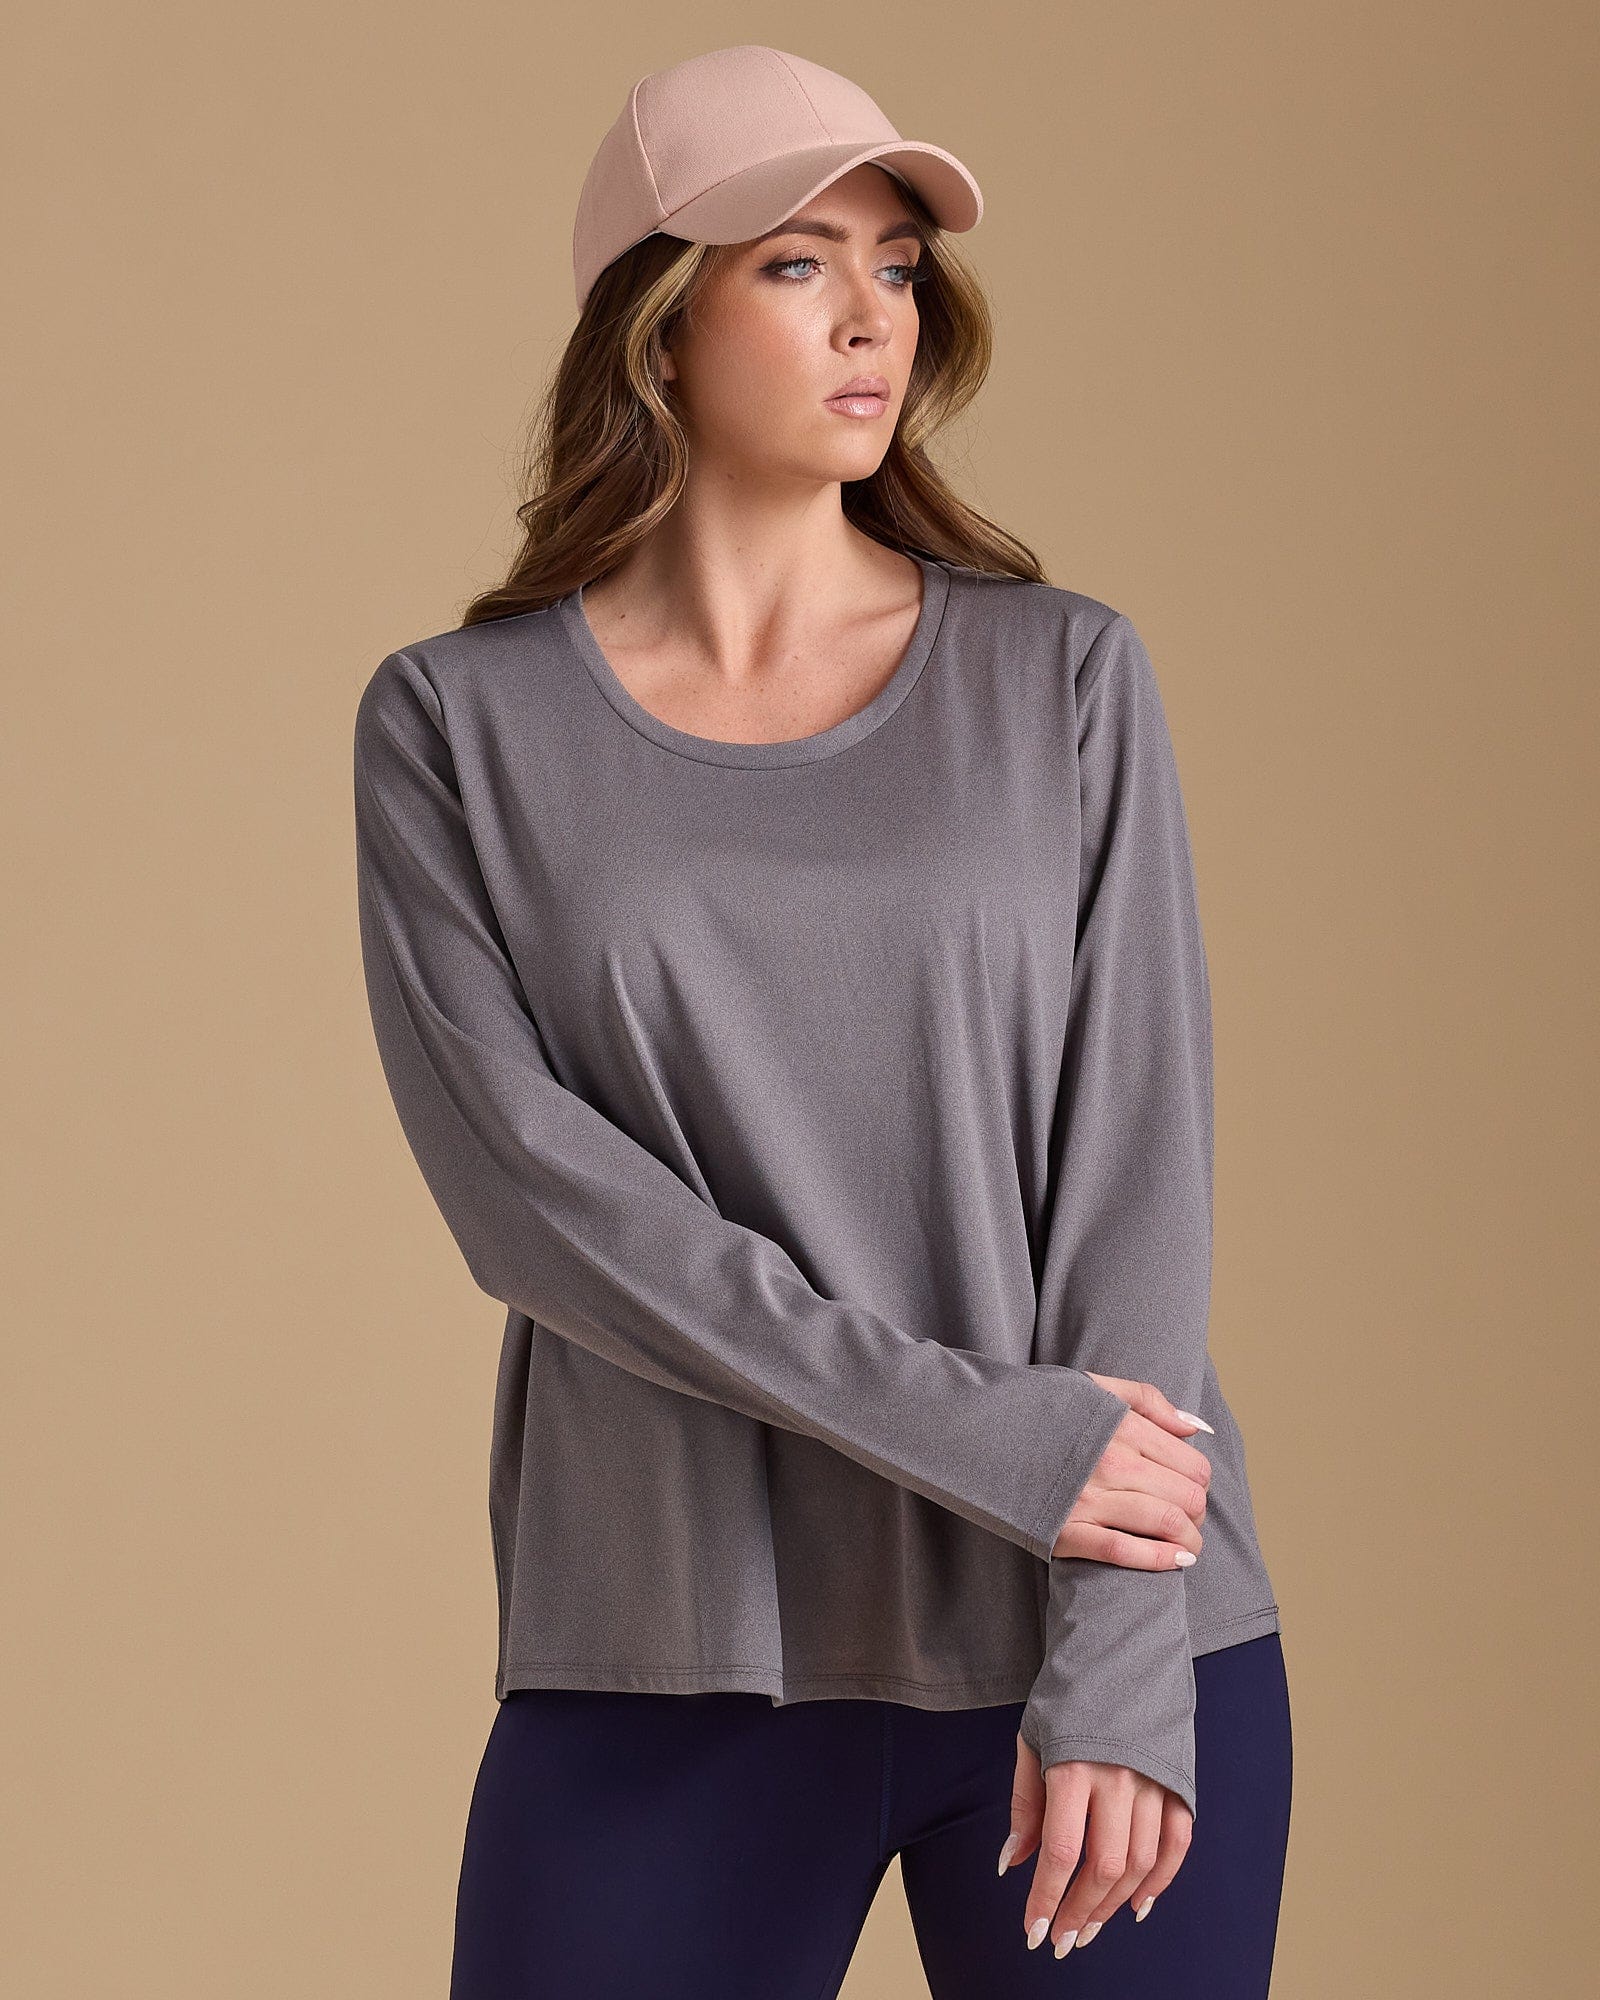 Woman in a grey long sleeve tshirt